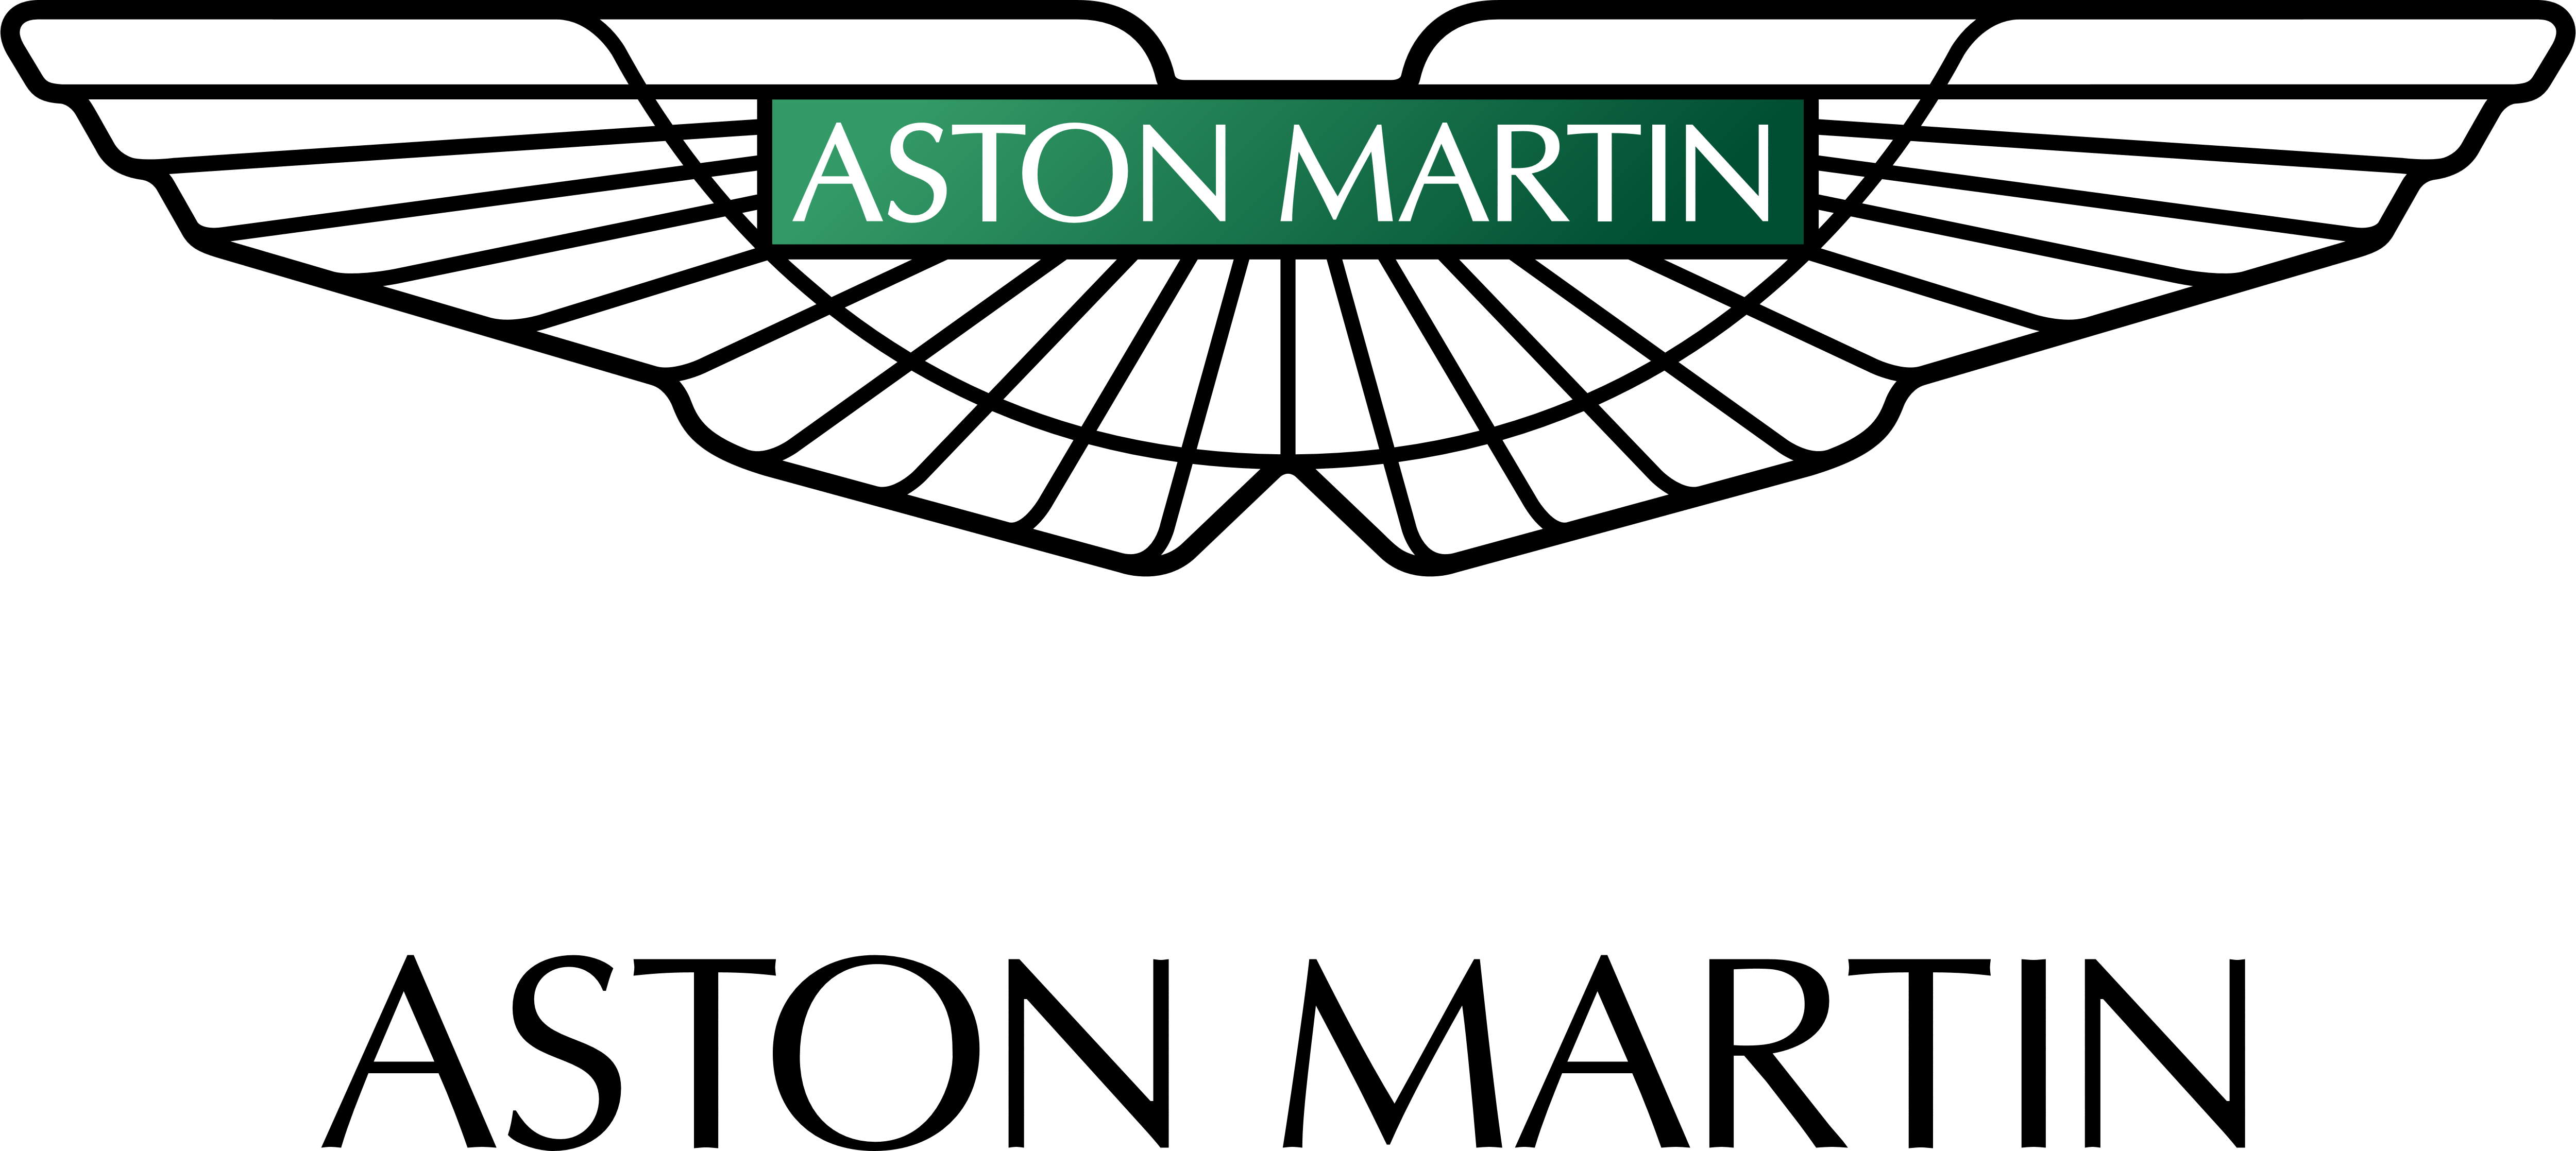 Aston Martin Vantage Ford Mot